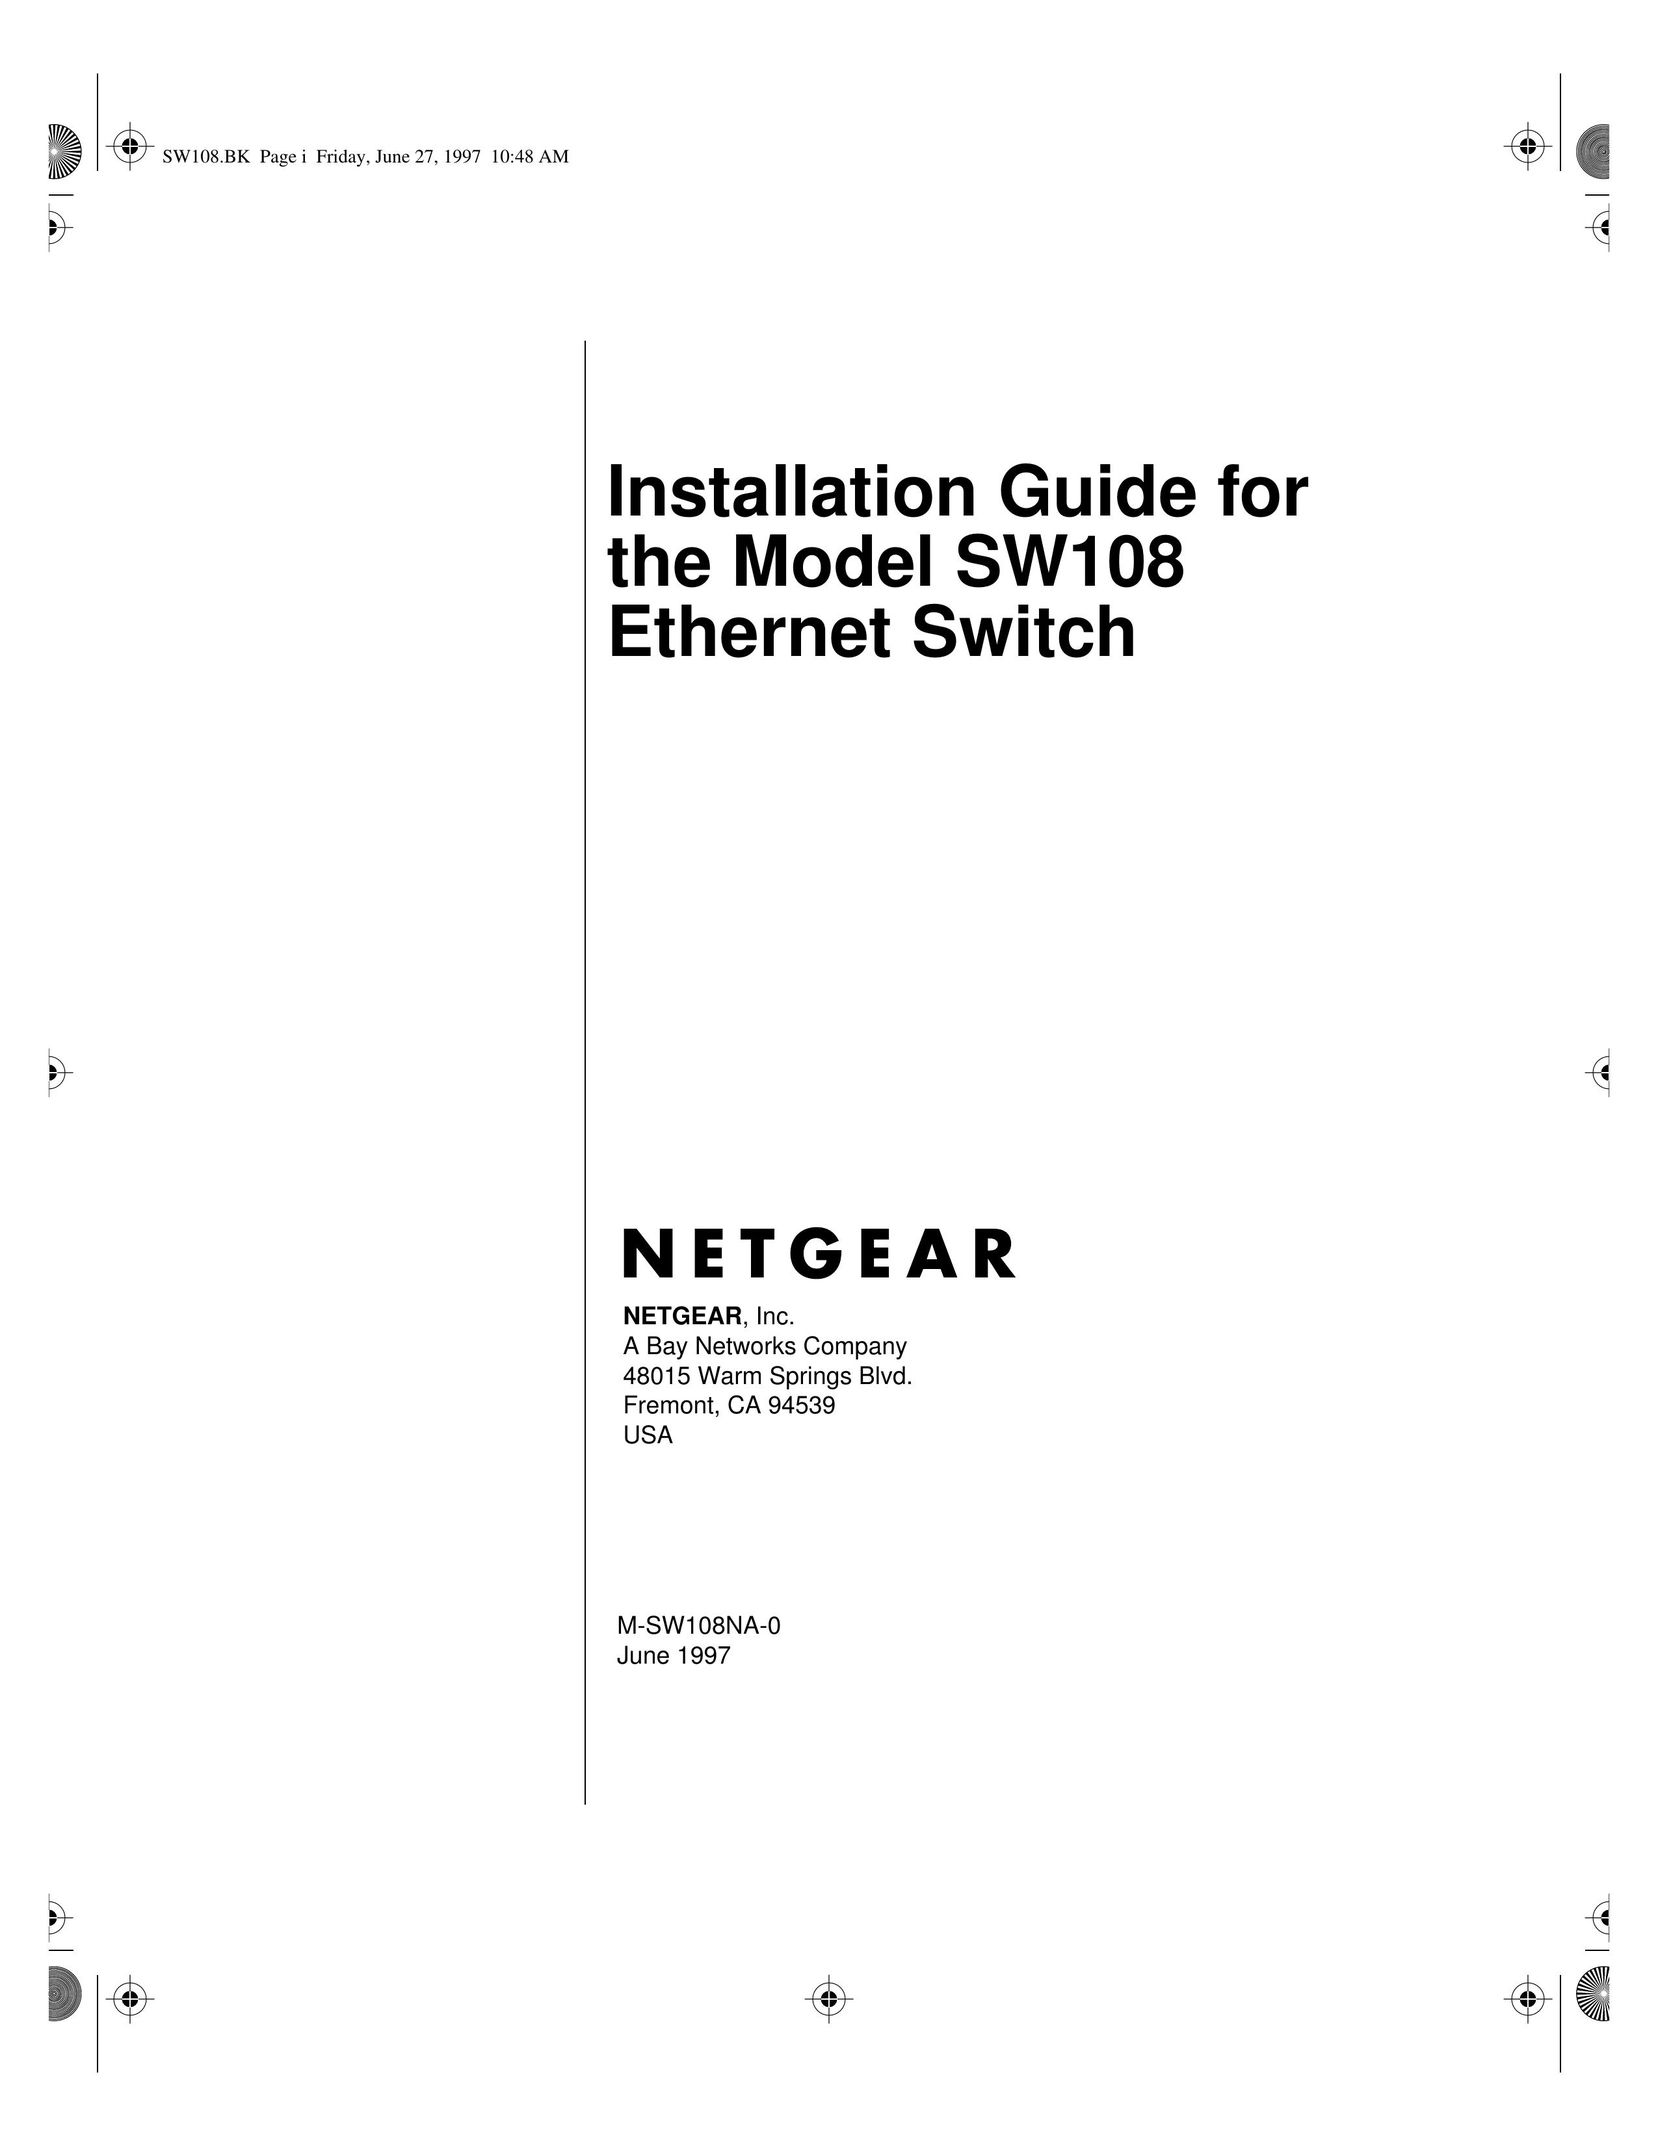 NETGEAR SW108 Computer Monitor User Manual